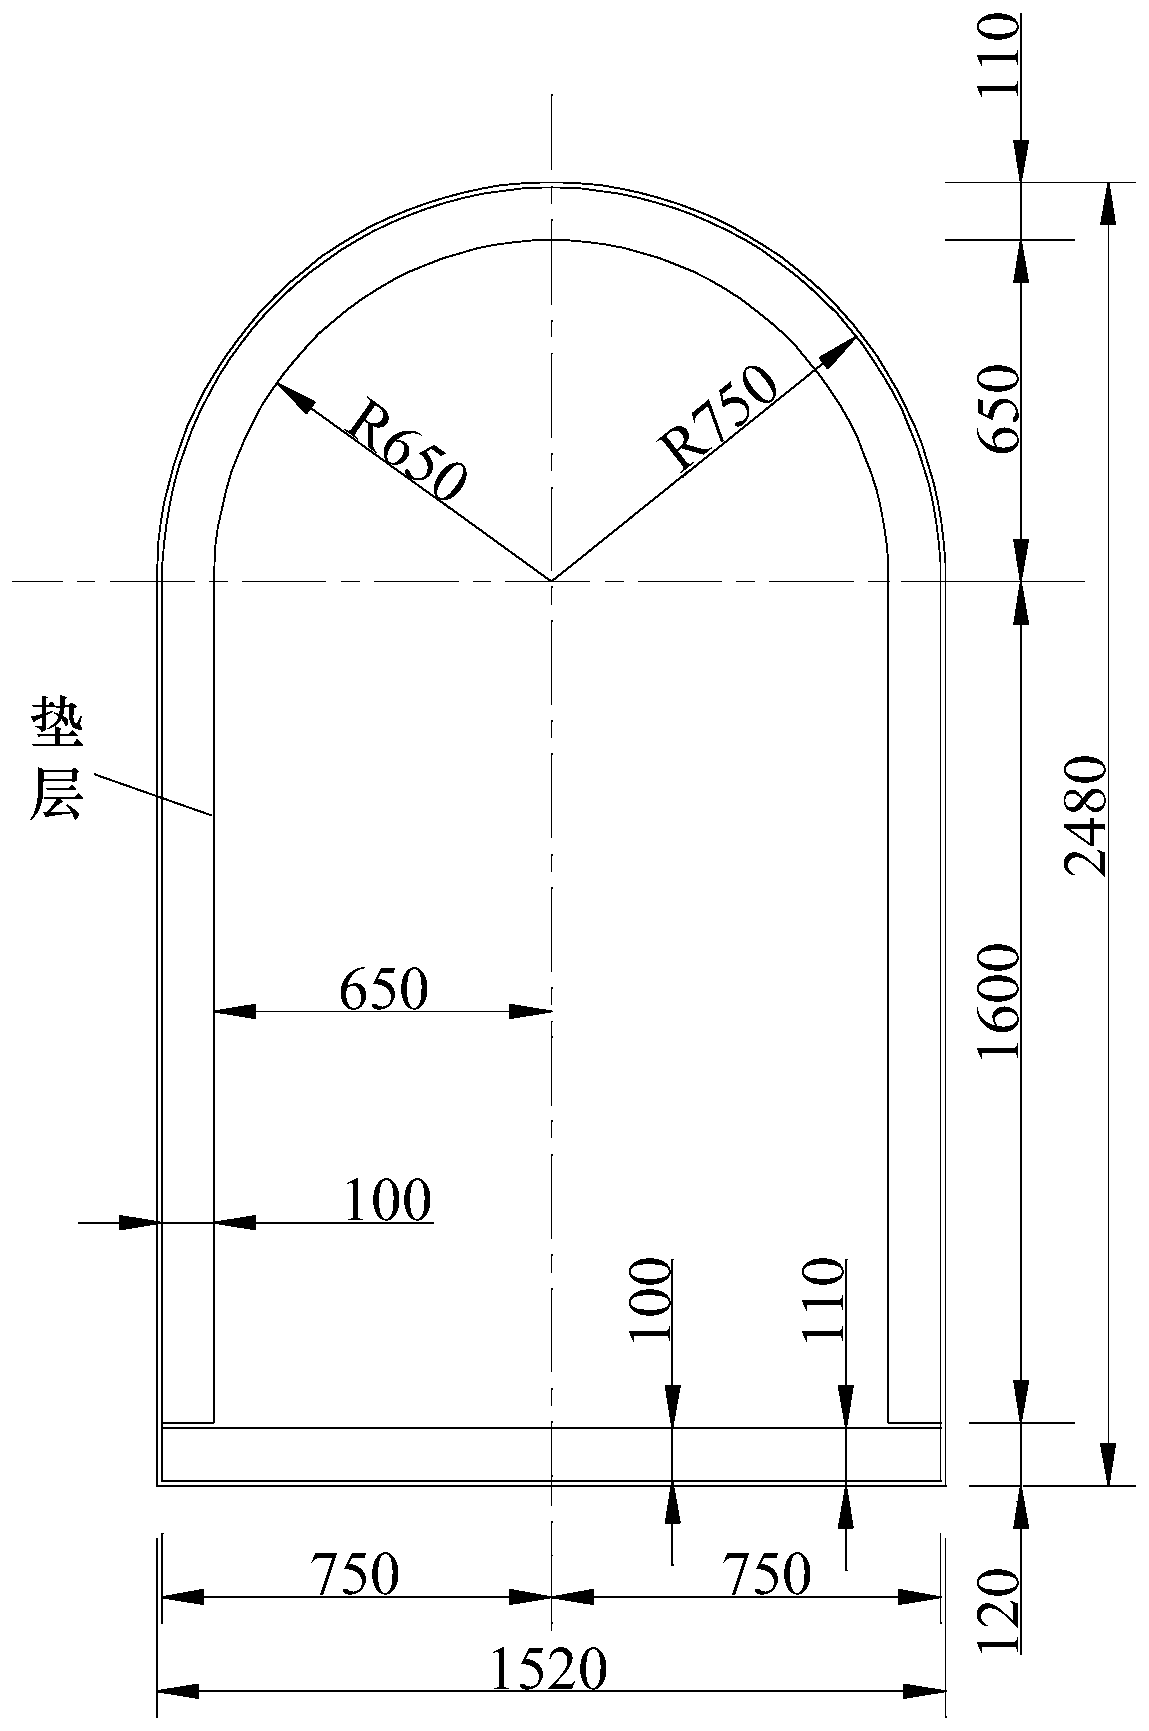 A tunnel bottom plate lining concrete temperature crack control anti-cracking K value design method